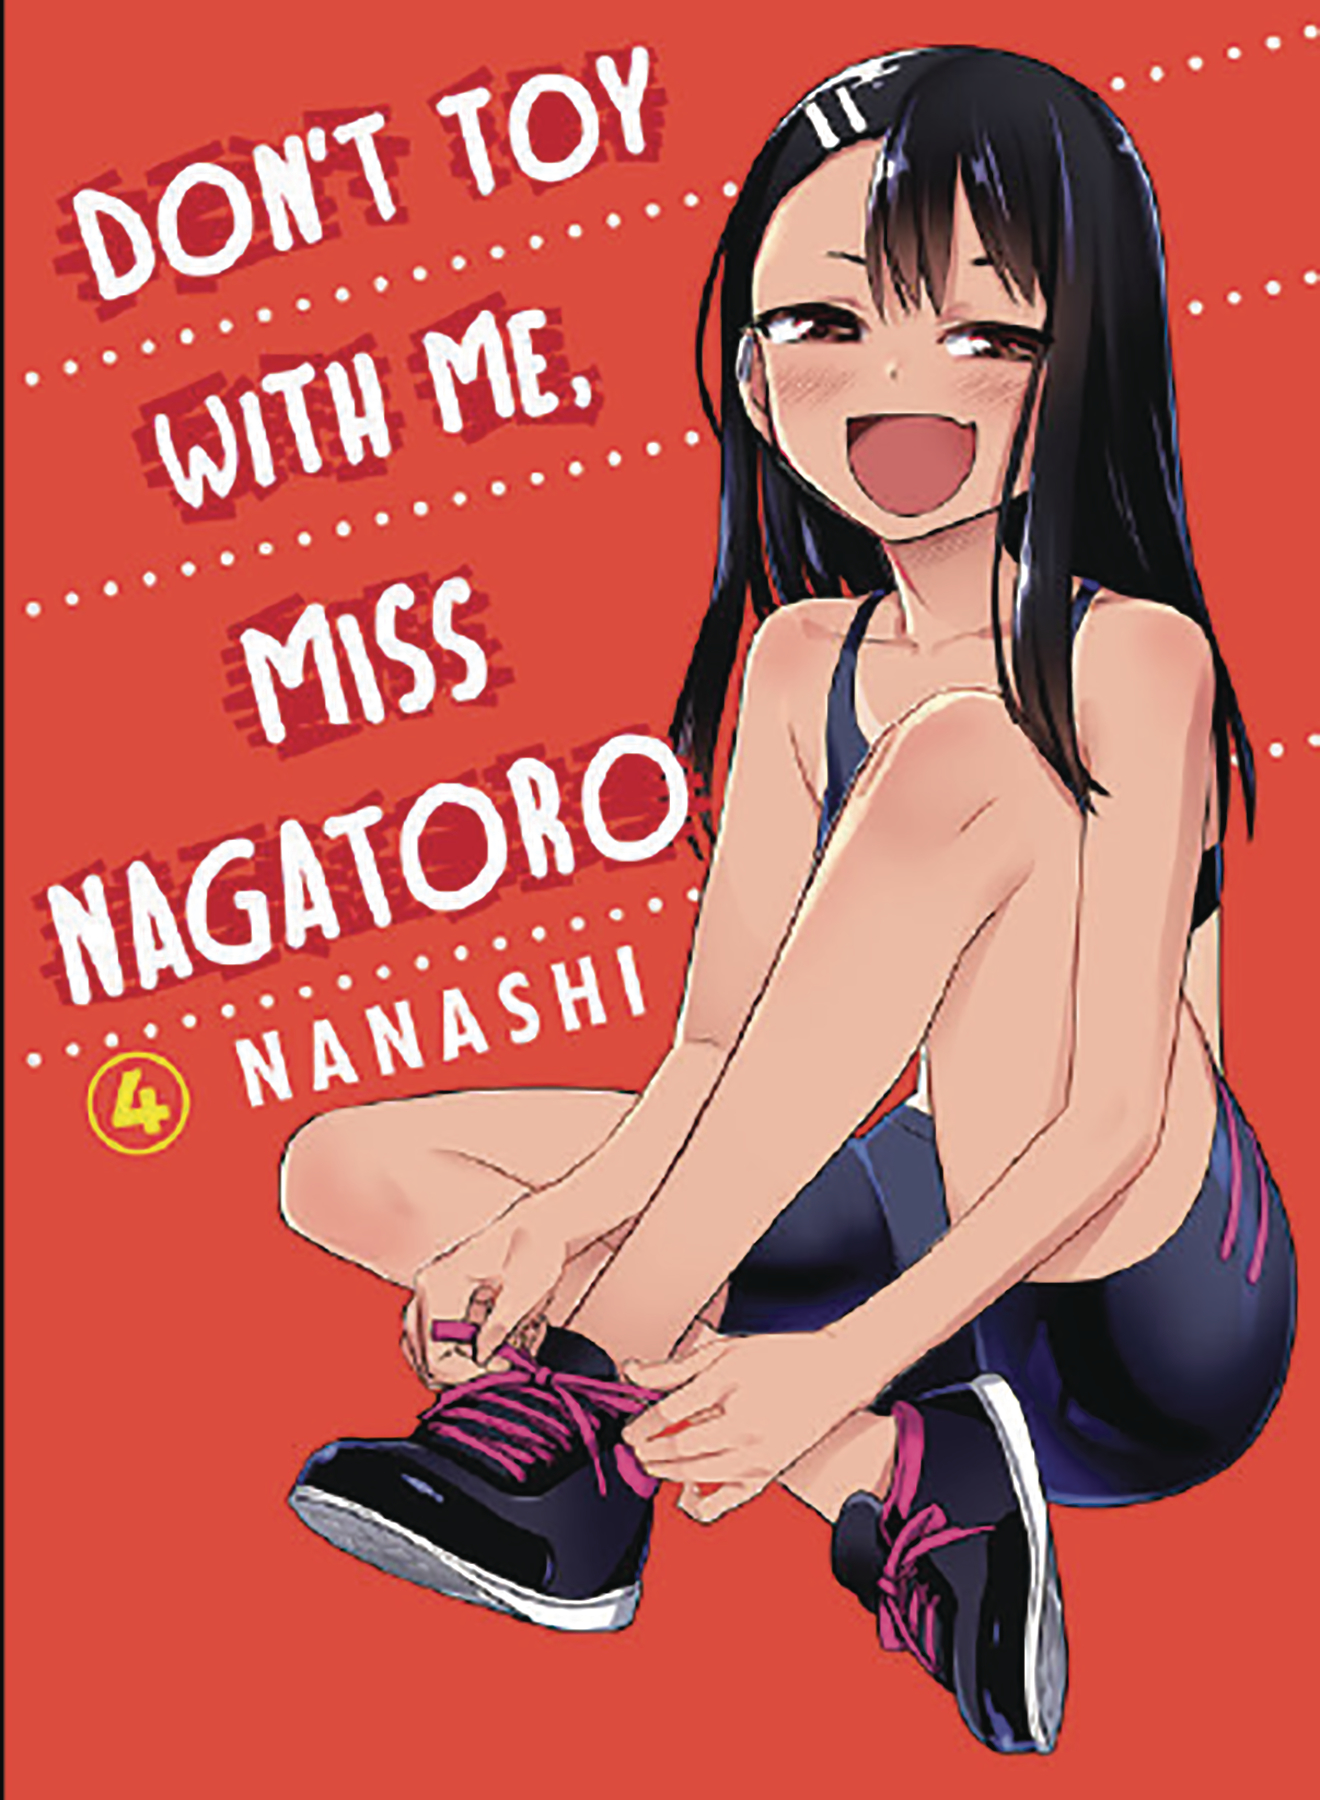 Don't Toy with Me Miss Nagatoro Manga Volume 4